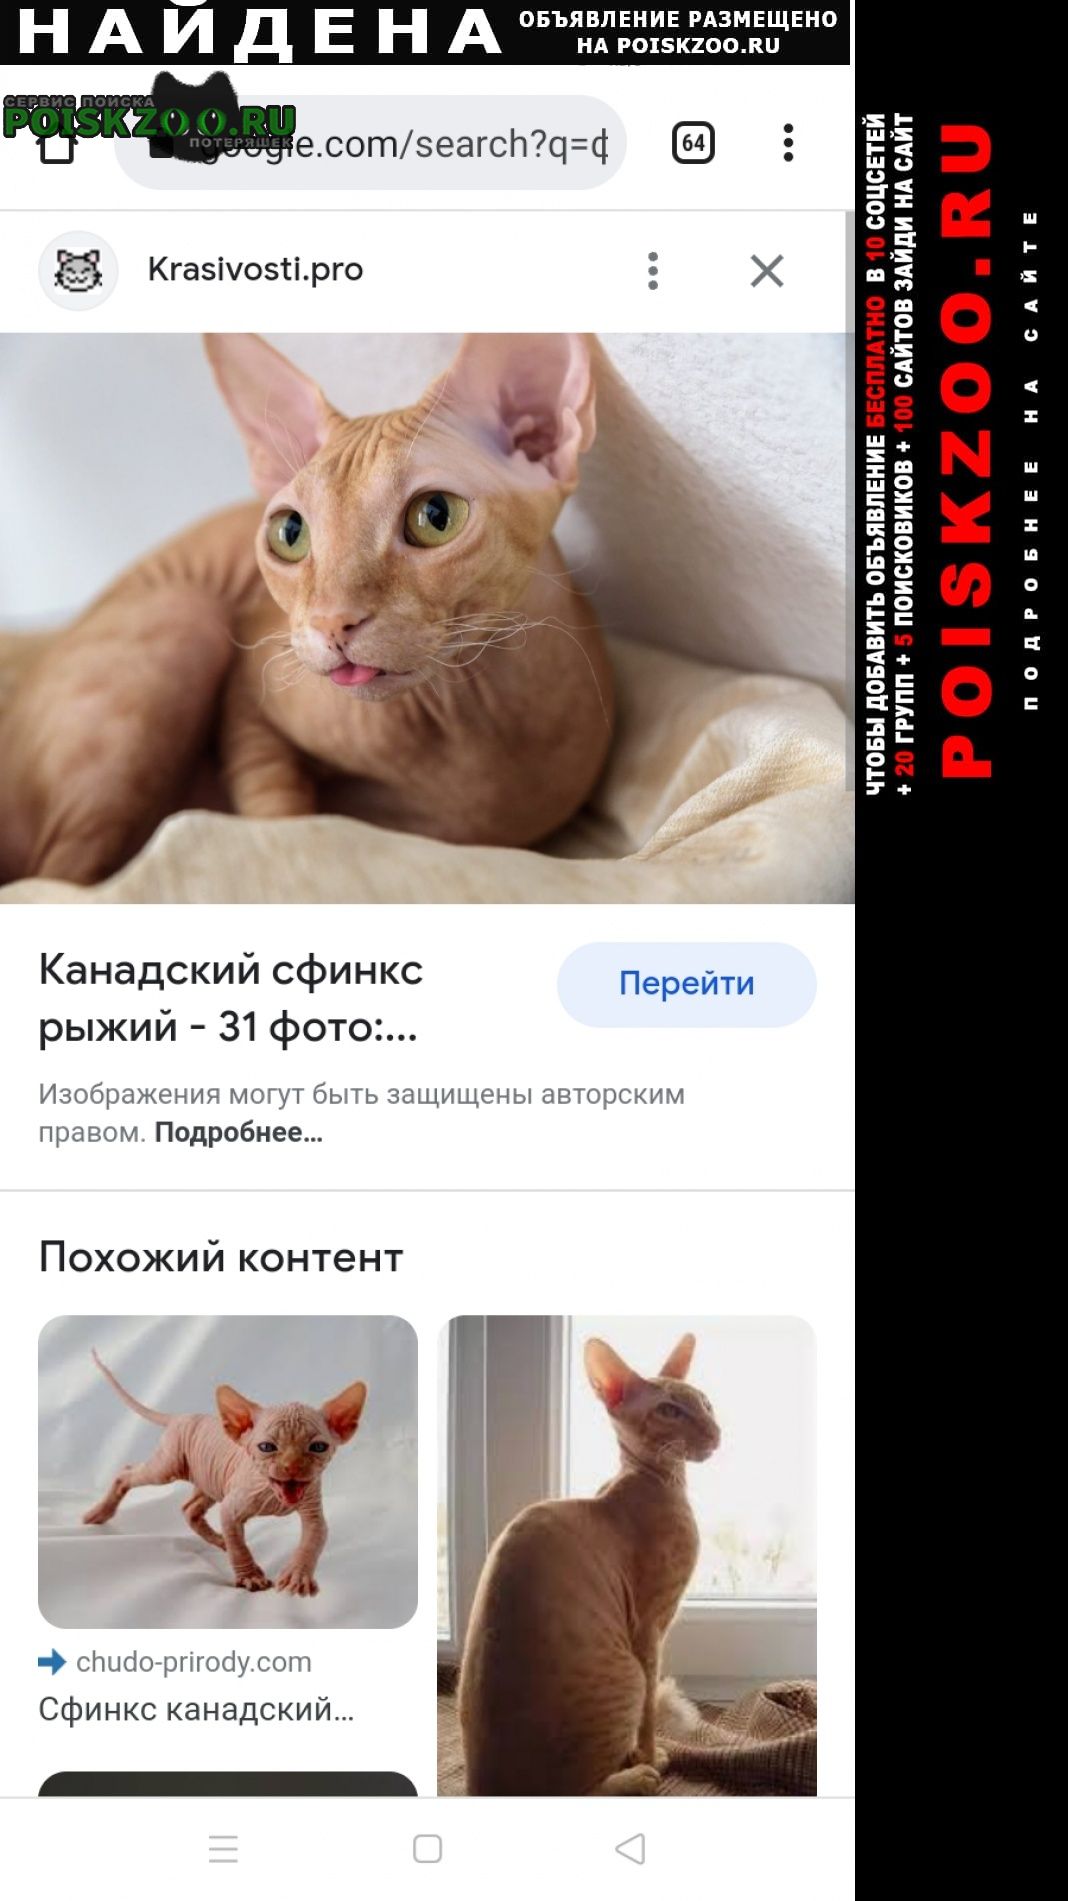 Найдена кошка фото 2 из интернета Новокузнецк